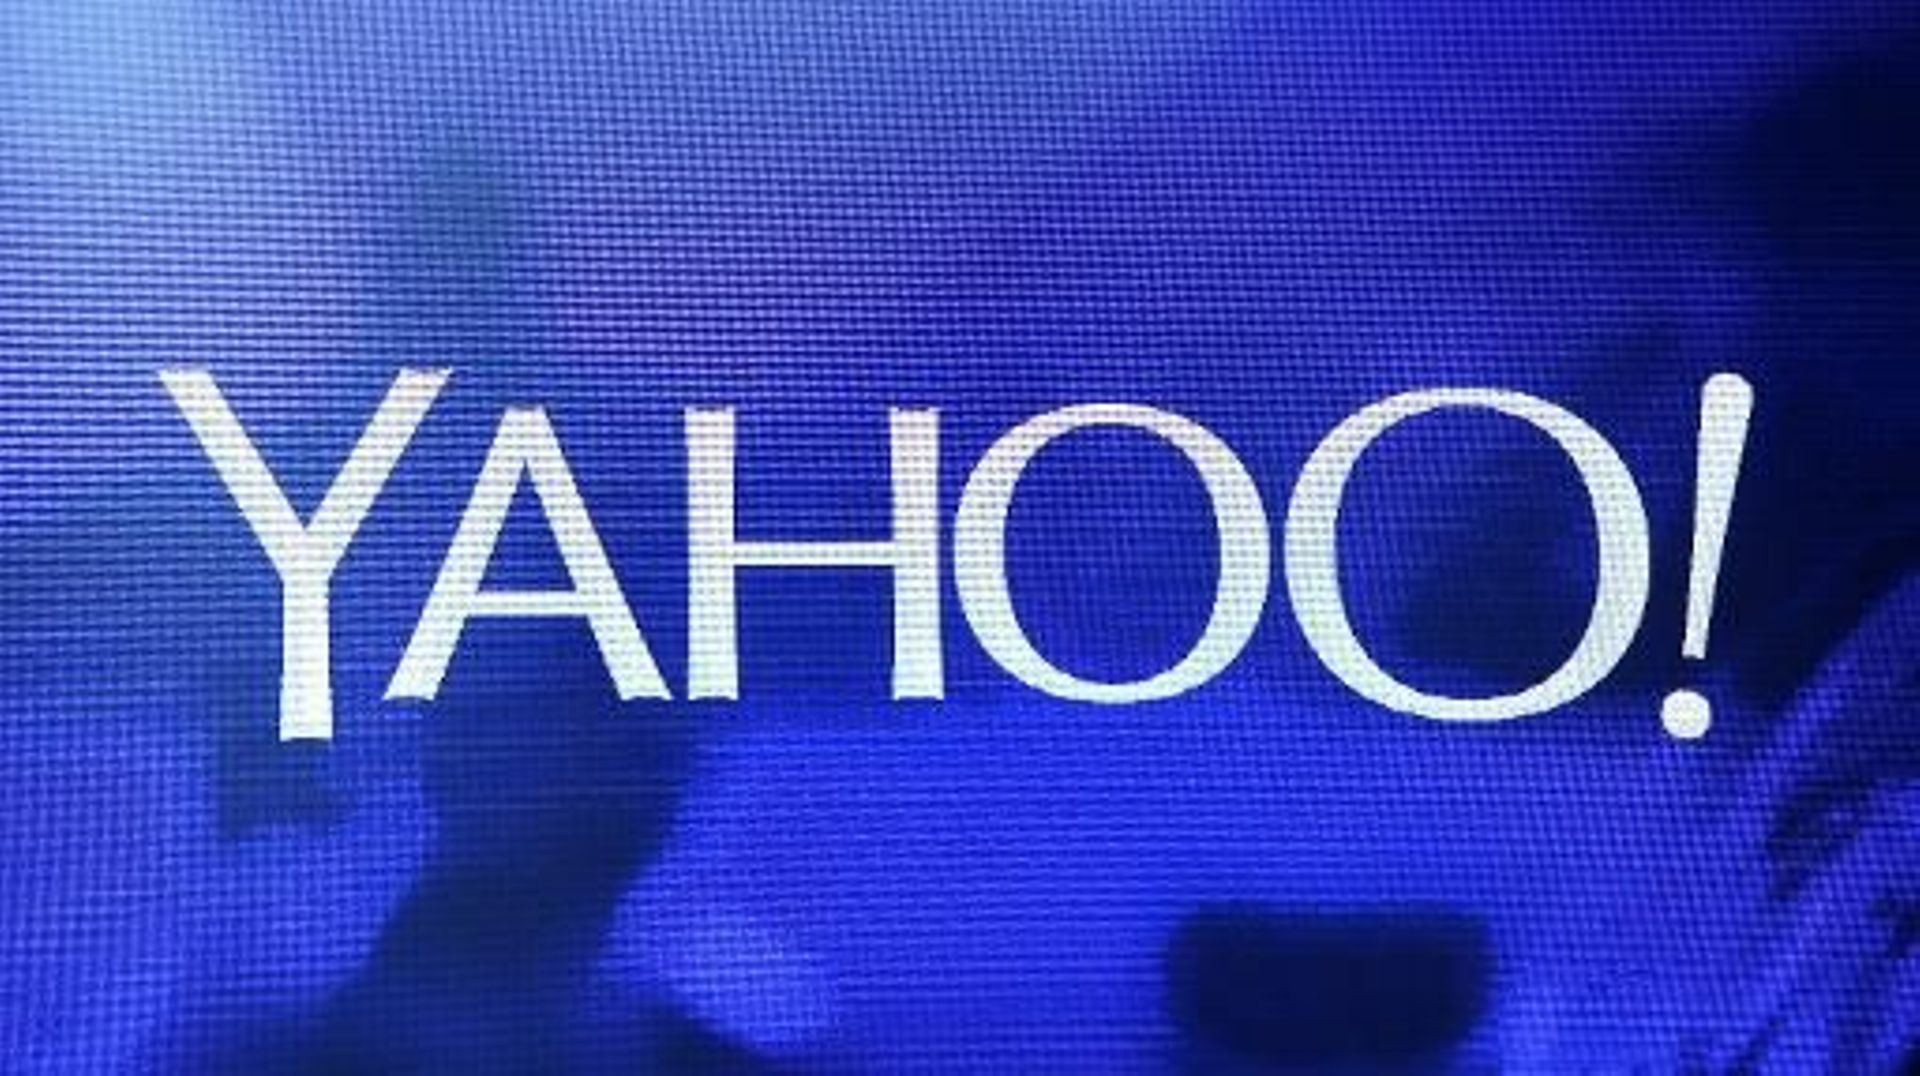 Le logo de Yahoo!